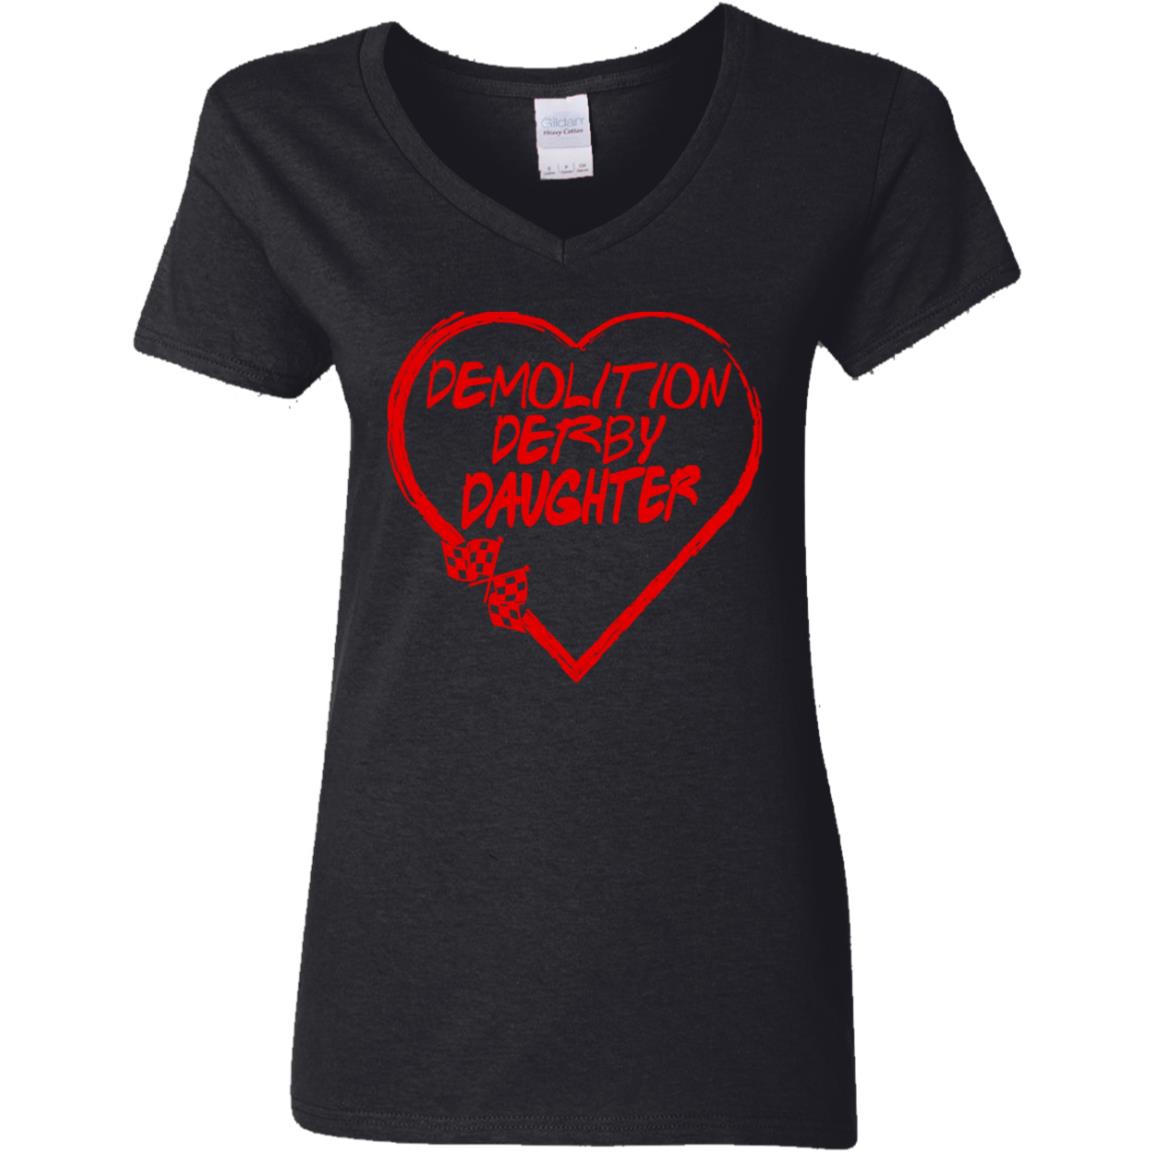 Demolition Derby Daughter Heart Ladies' 5.3 oz. V-Neck T-Shirt